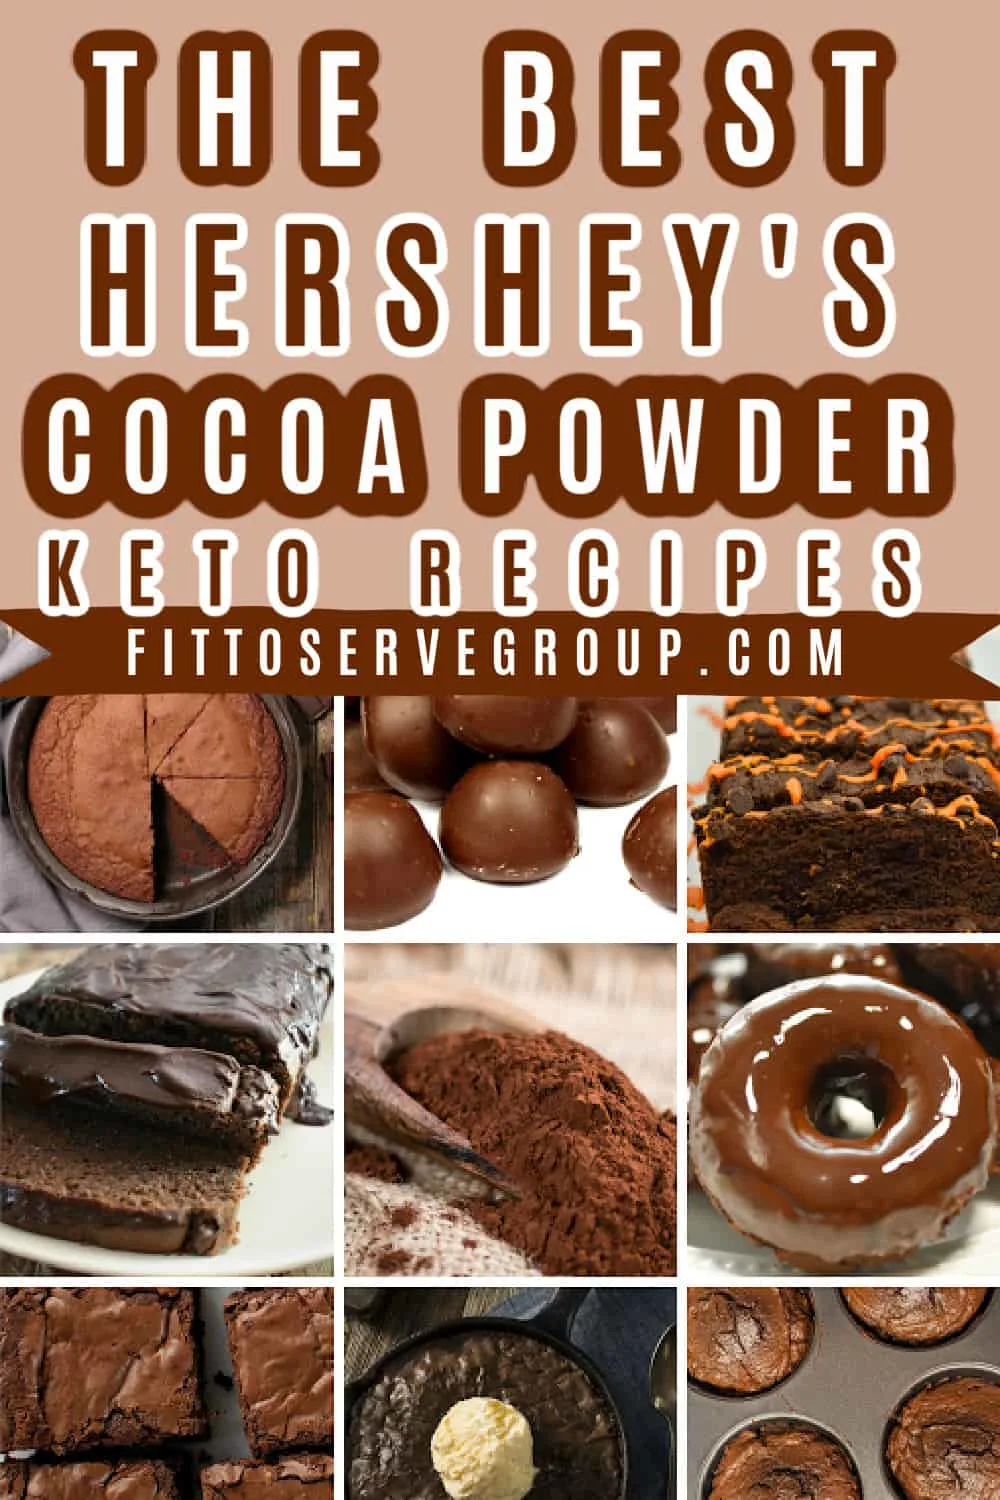 Hershey's Cocoa Powder Keto Recipes · Fittoserve Group